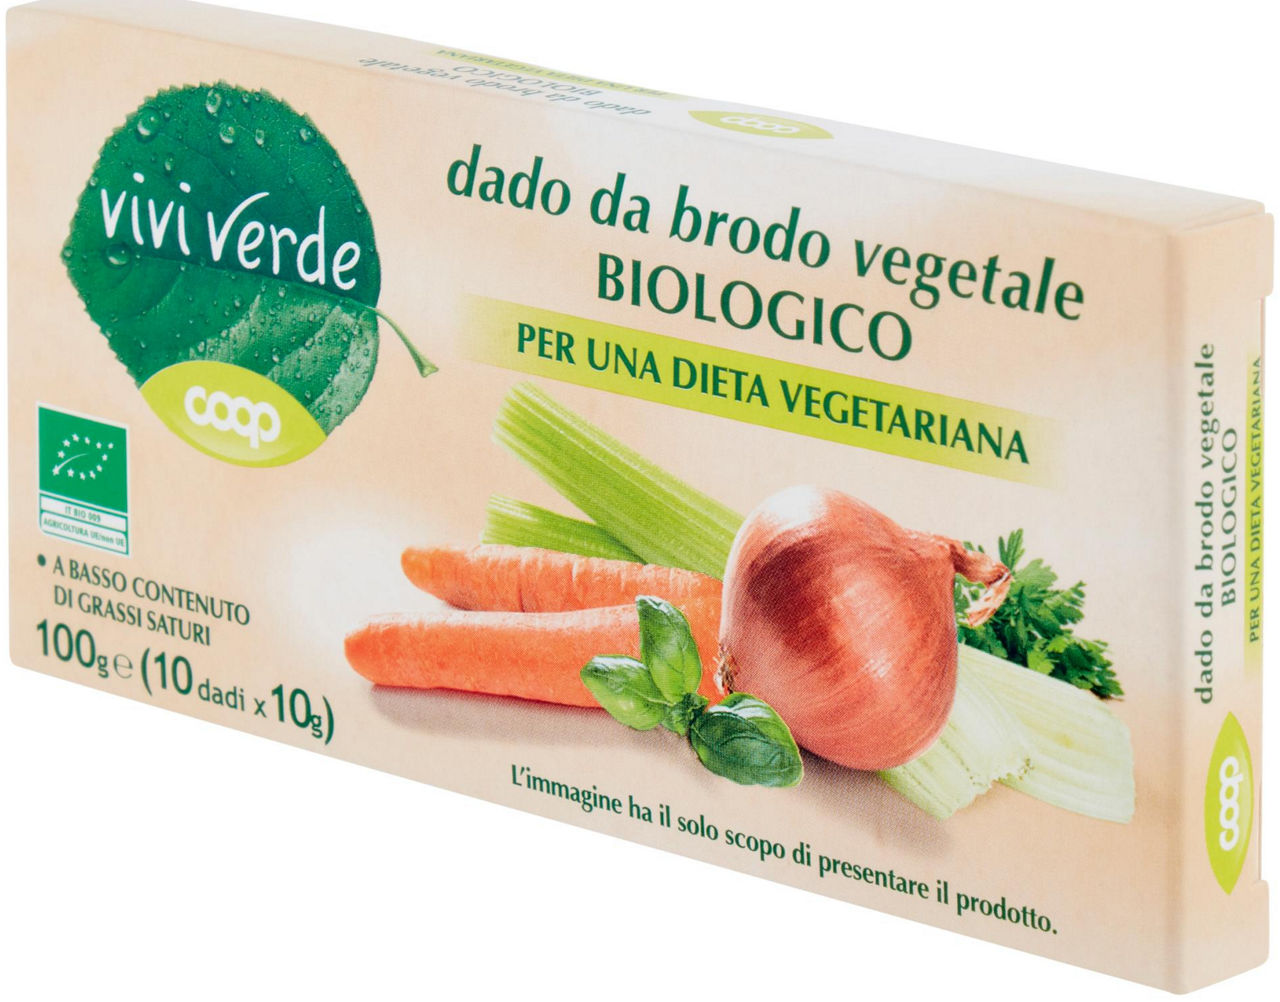 dado da brodo vegetale Biologico Vivi Verde 10 x 10 g - 6